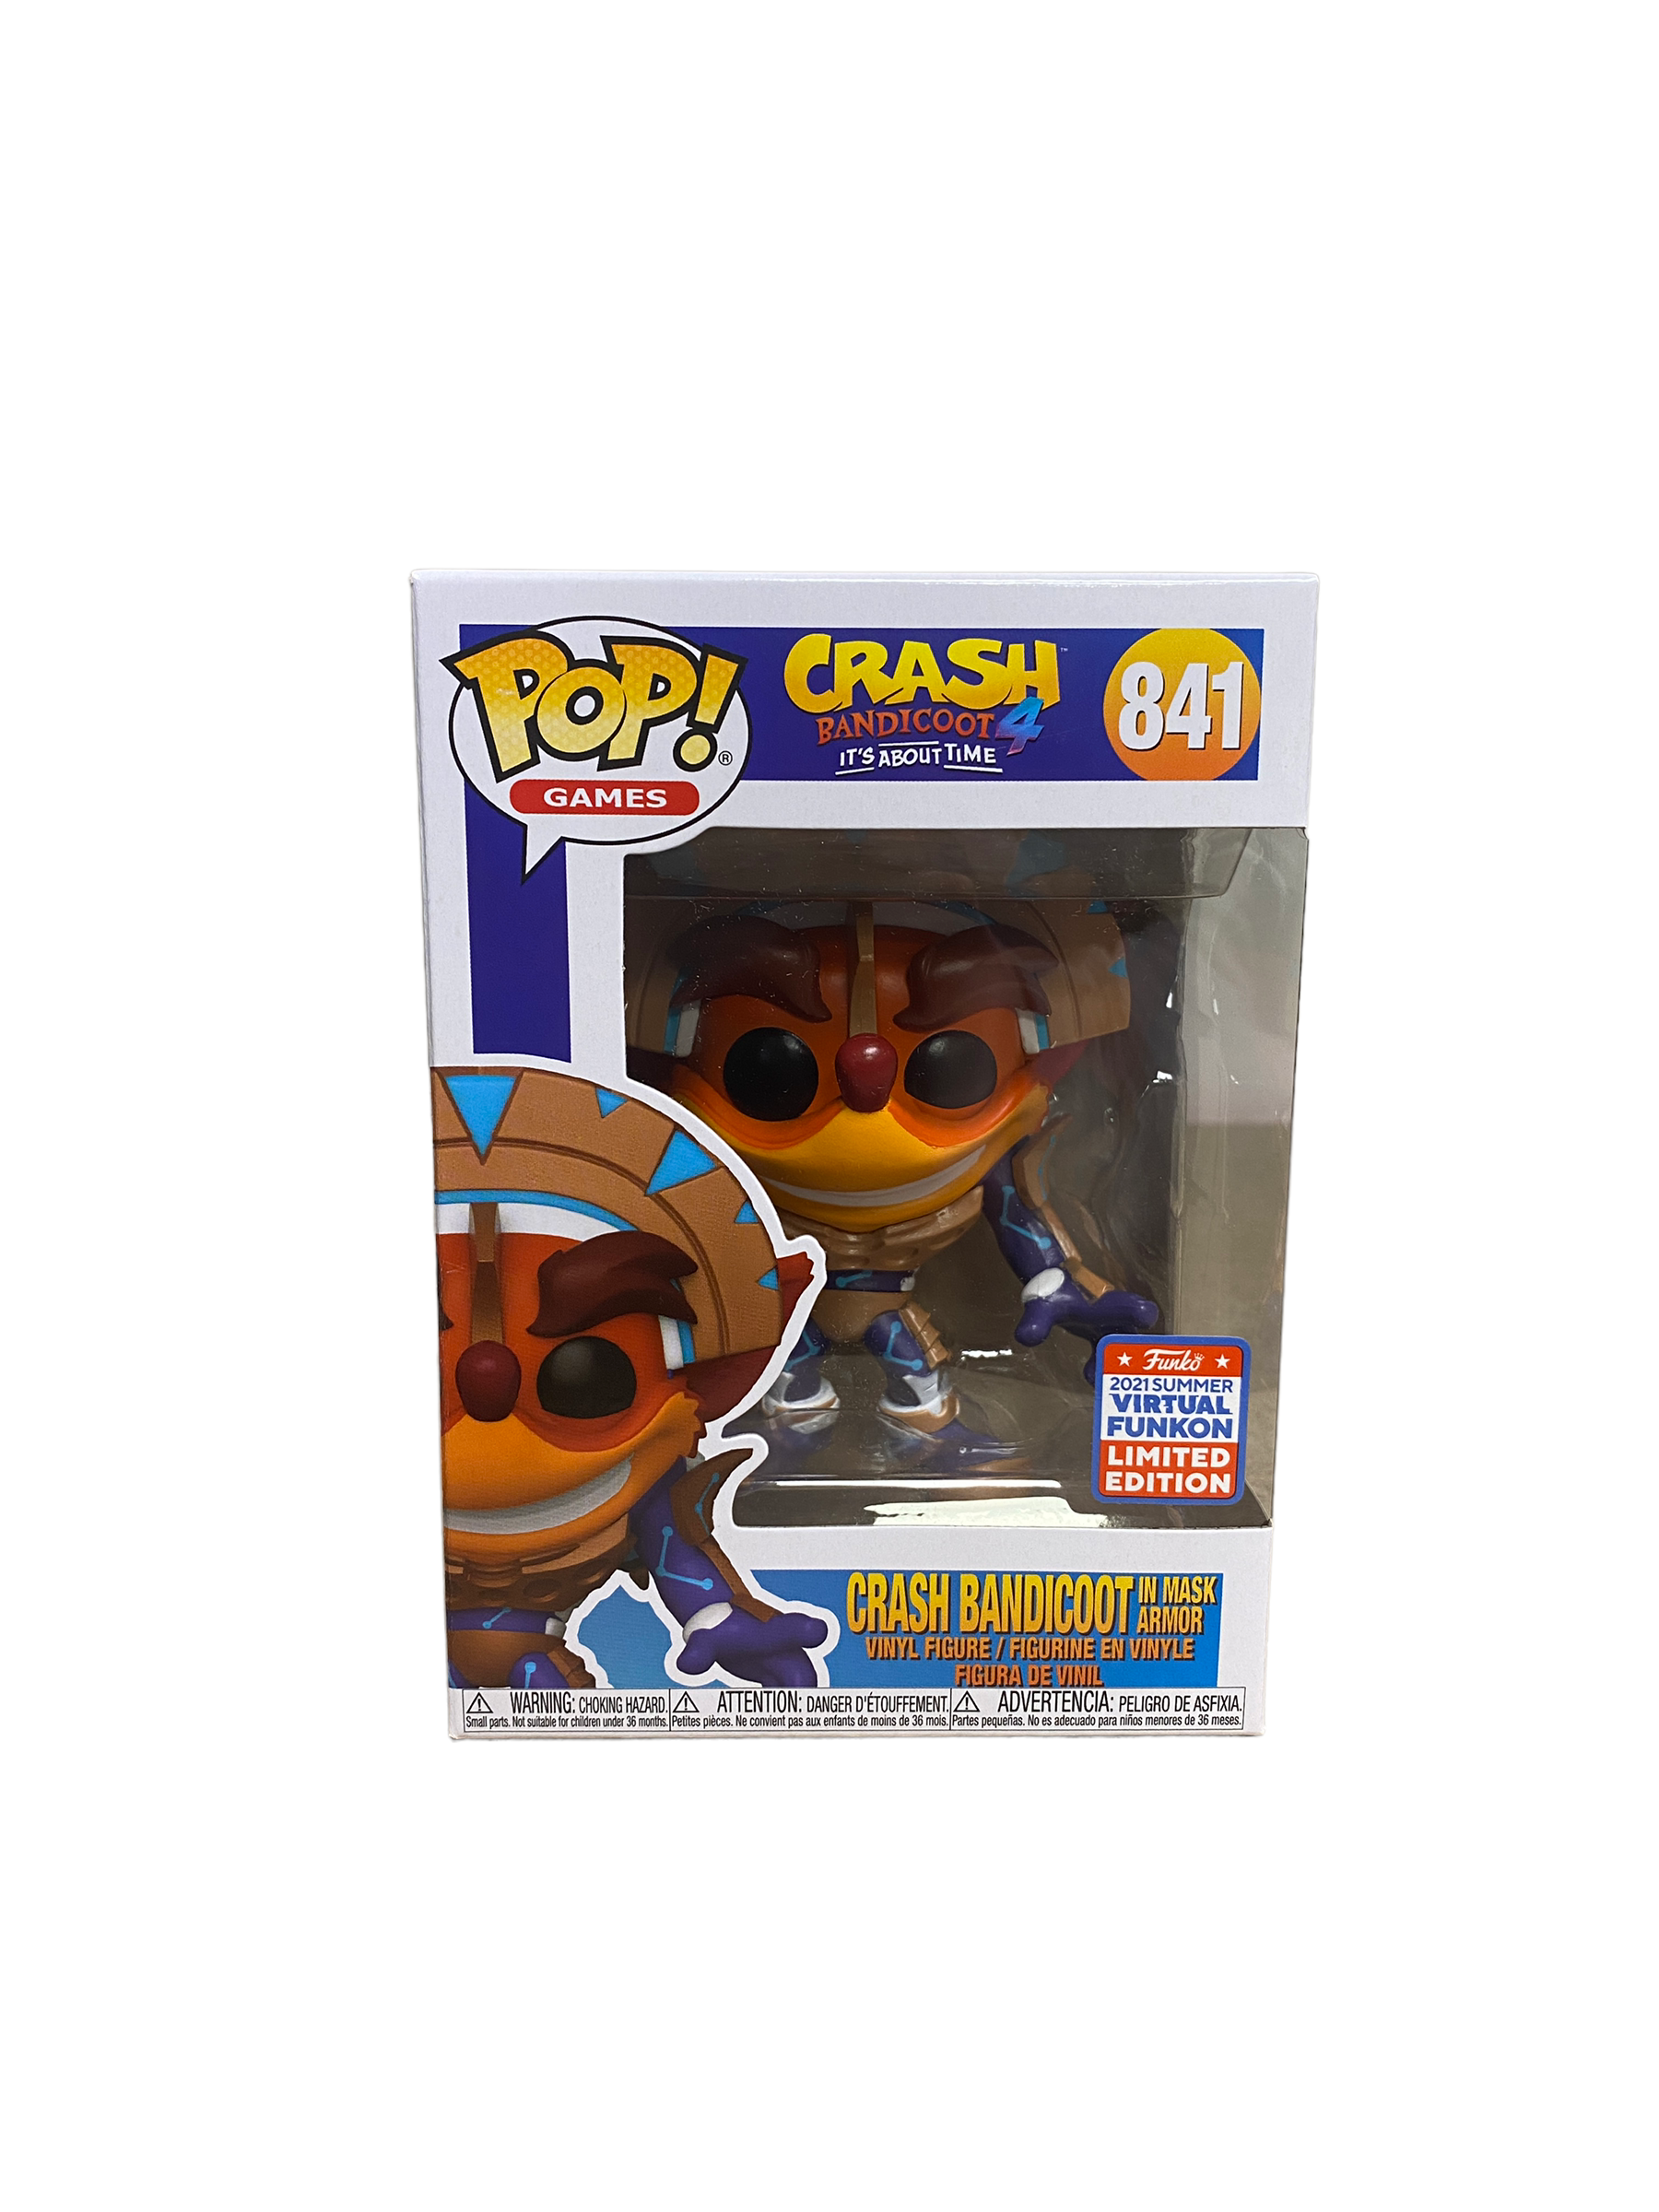 Crash Bandicoot In Mask Armor #841 Funko Pop! - Crash Bandicoot 4 - Virtual Funkon 2021 Official Convention Exclusive - Condition 9/10